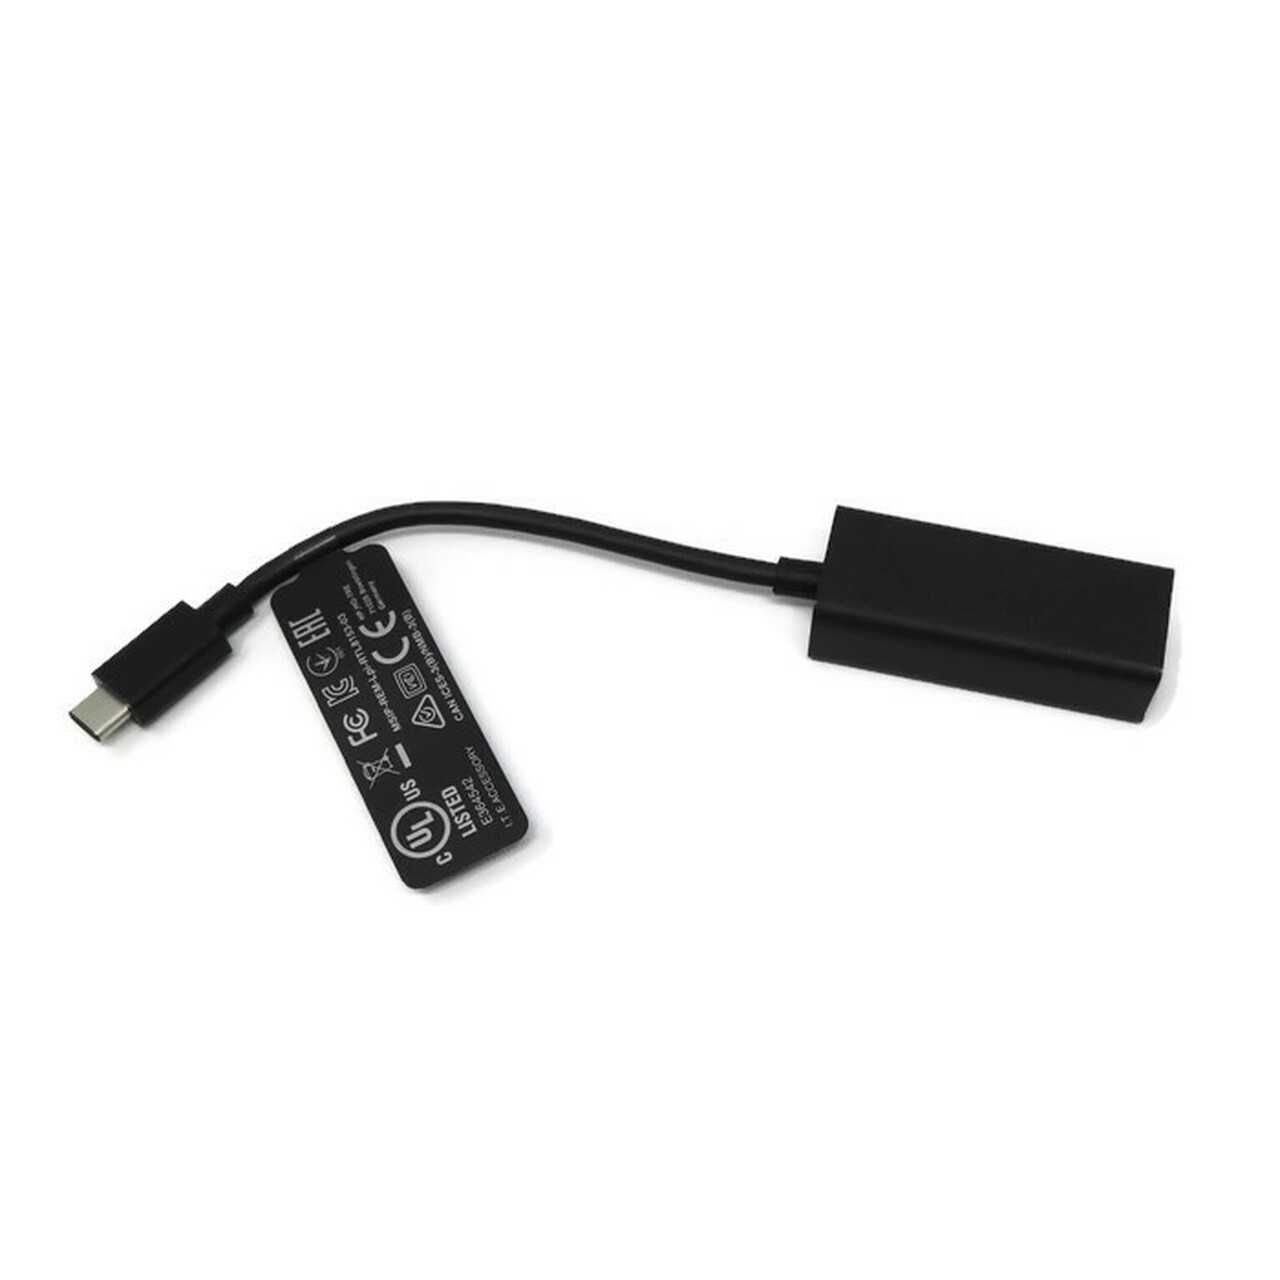 Adaptor HP Gigabit Placa retea USB Type-C to RJ45 Windows Mac v7w66aa